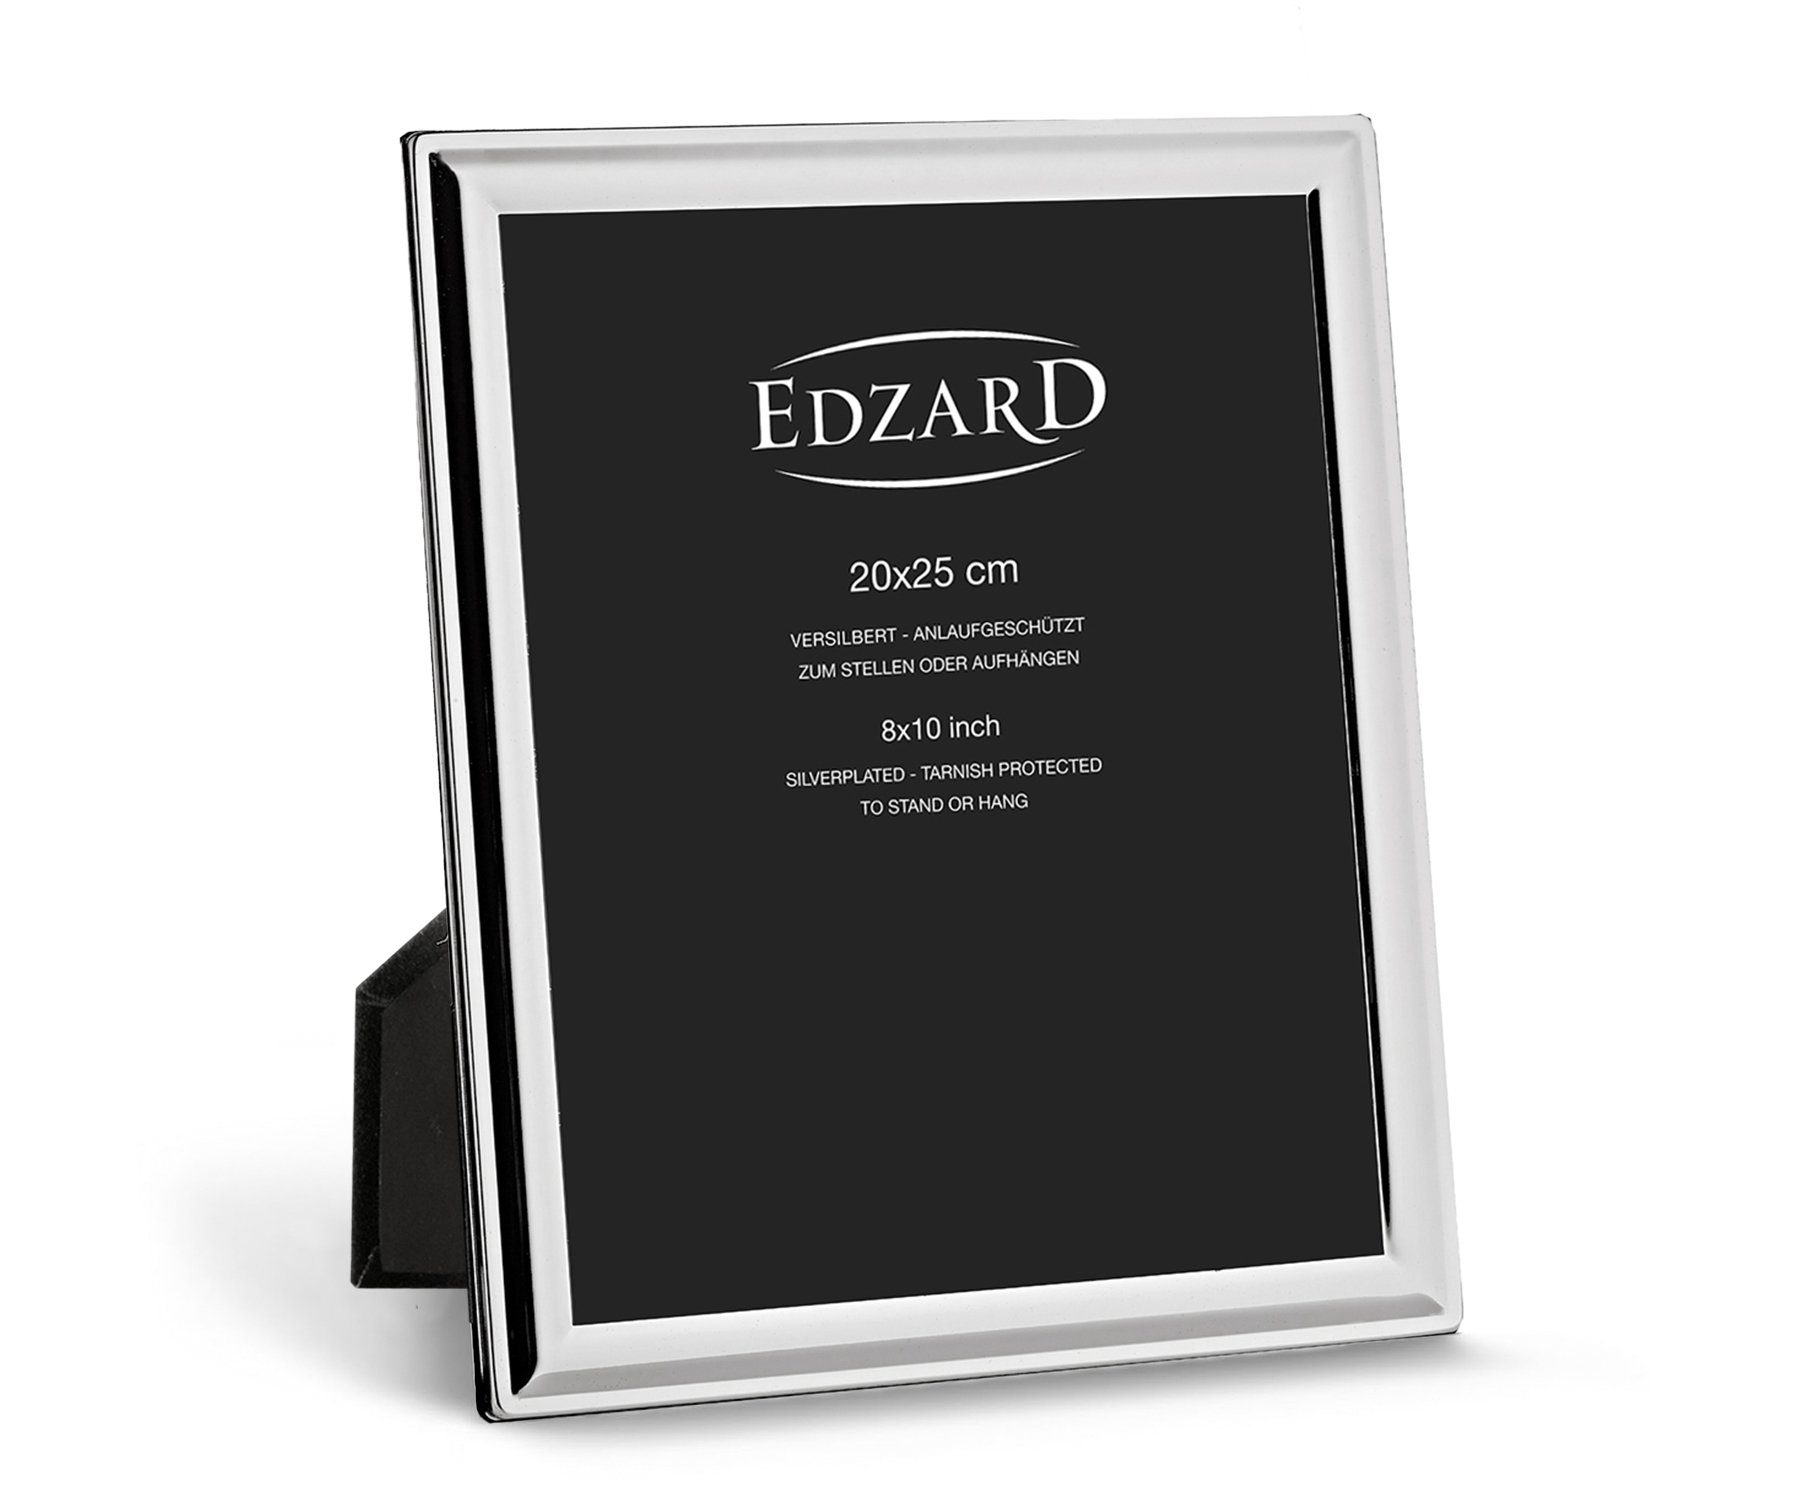 EDZARD Рамки Terni, für 20x25 cm Foto - Fotorahmen edel versilbert & anlaufgeschützt